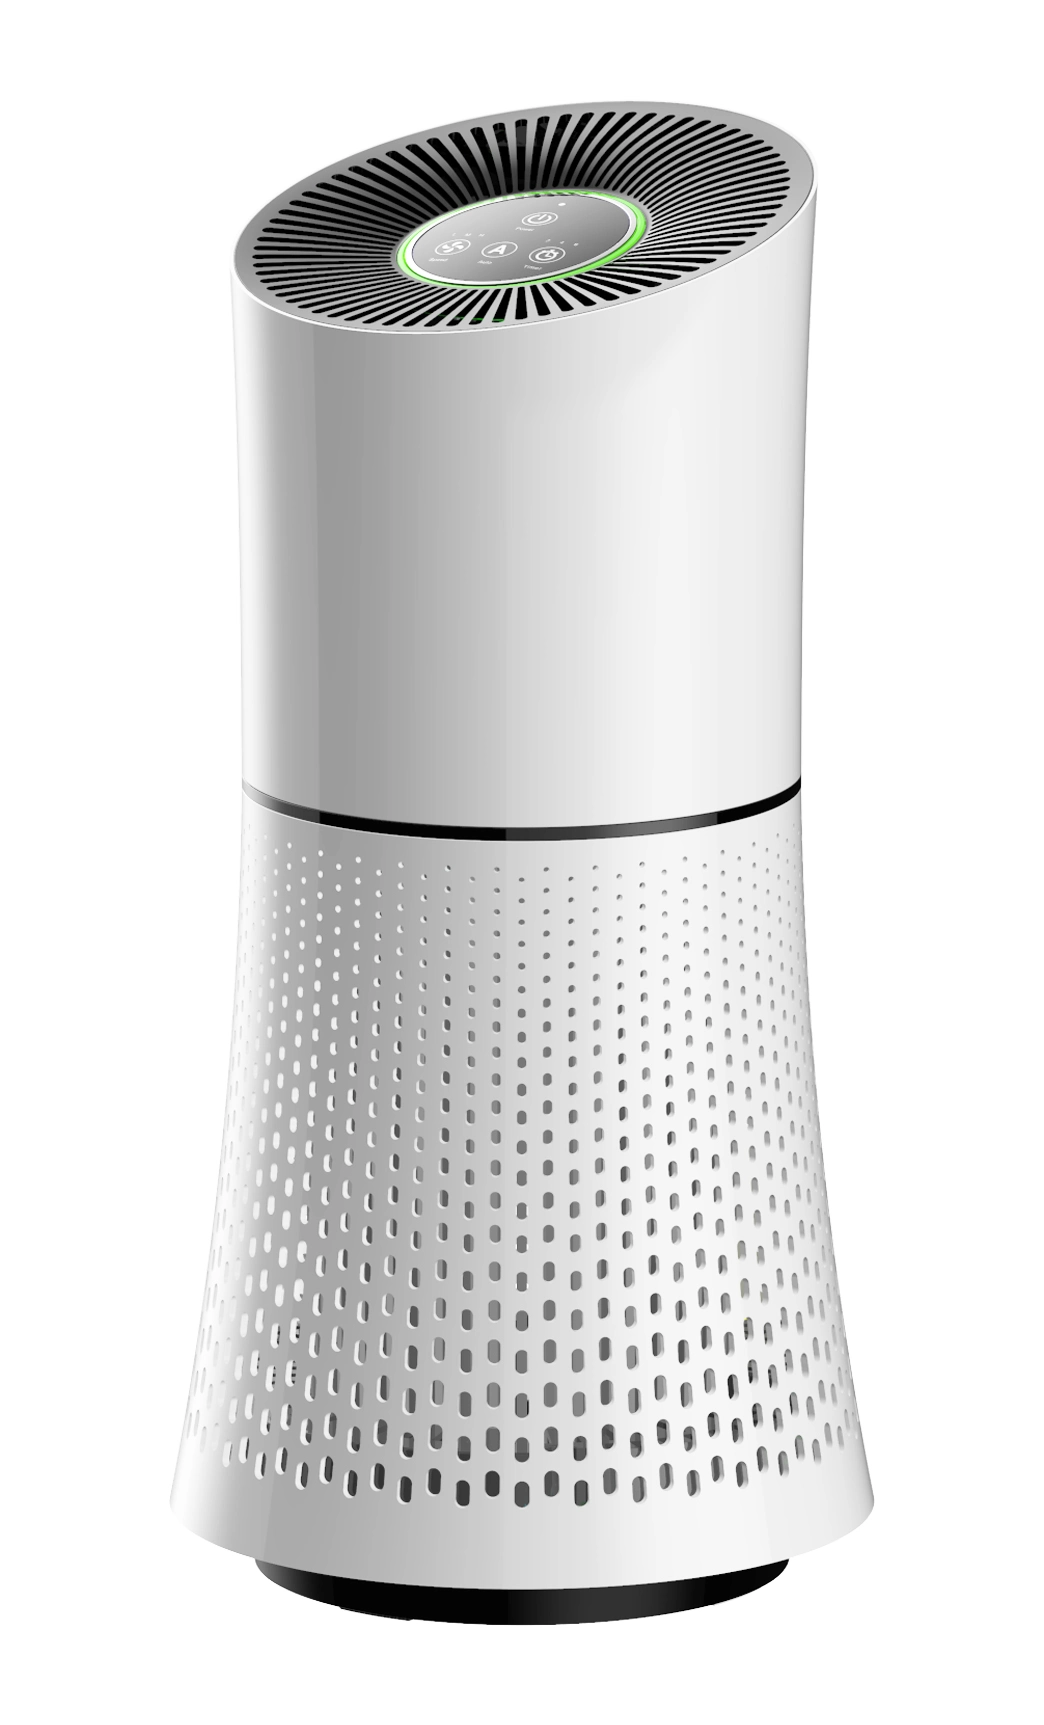 2020 New Design Home Appliance Kitchen Bedroom Air Purifier HEPA Filter Ce RoHS